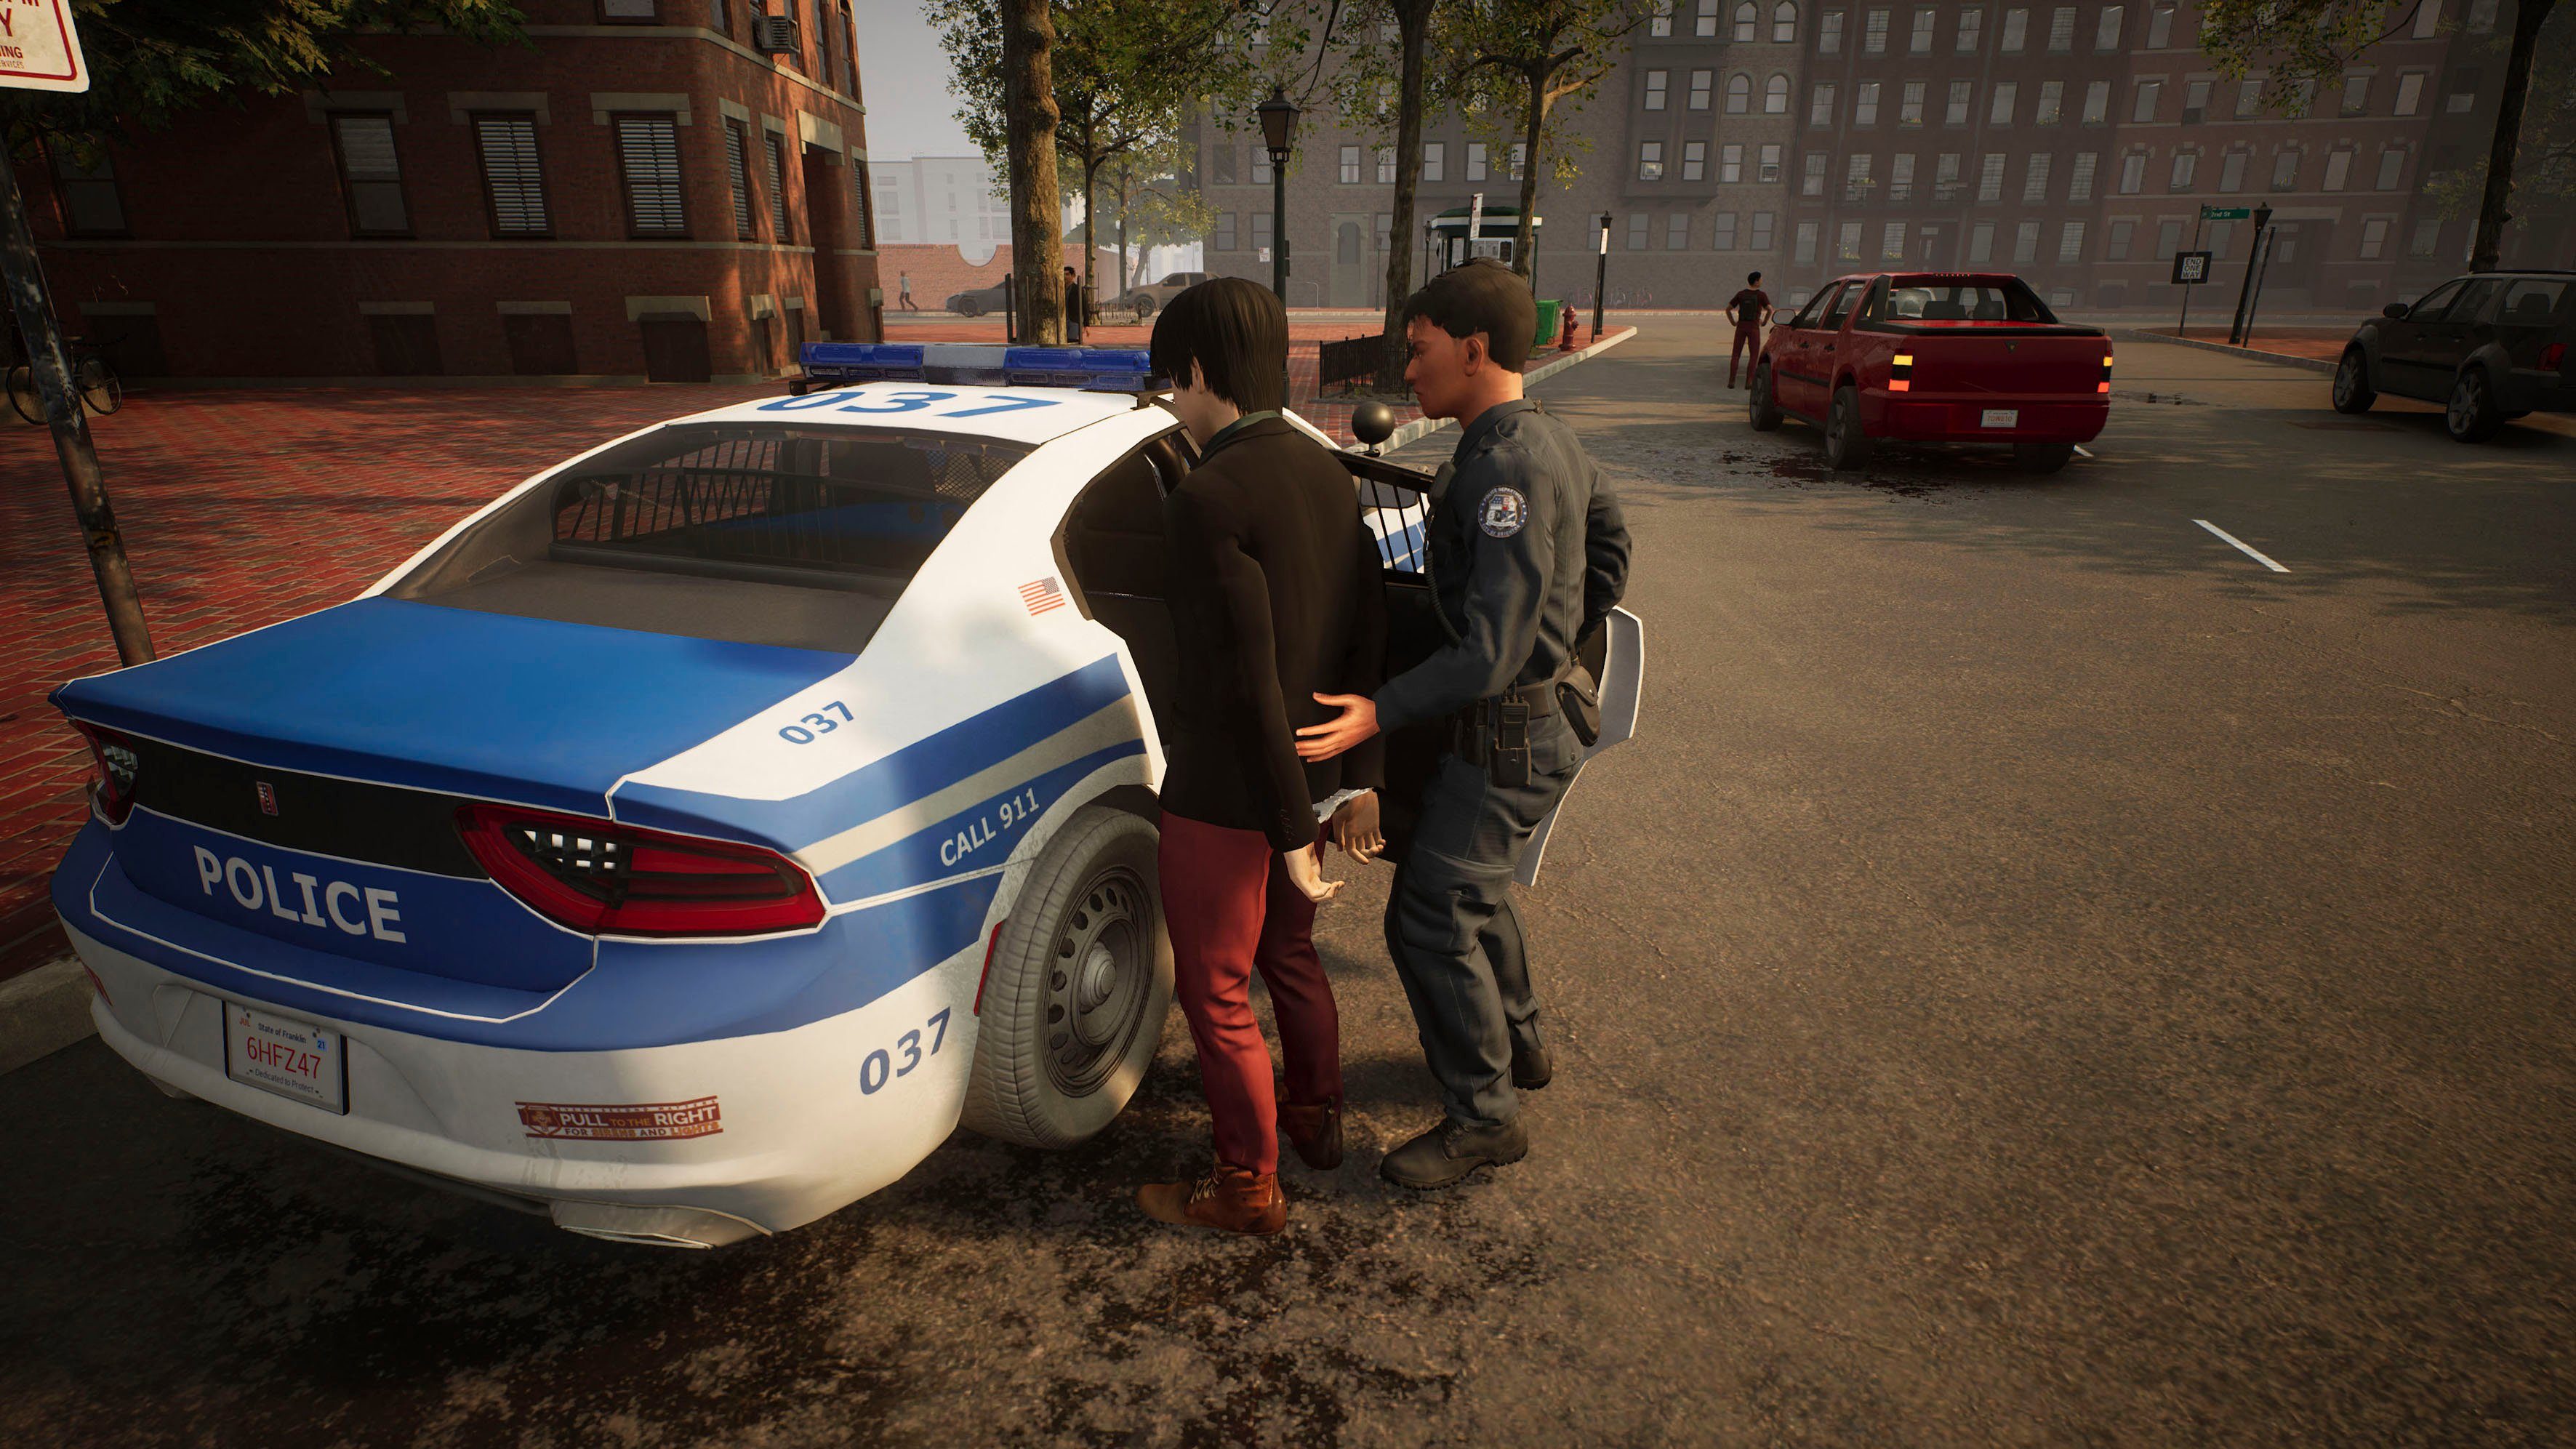 Patrol Simulator: PlayStation Police Astragon Officers 5